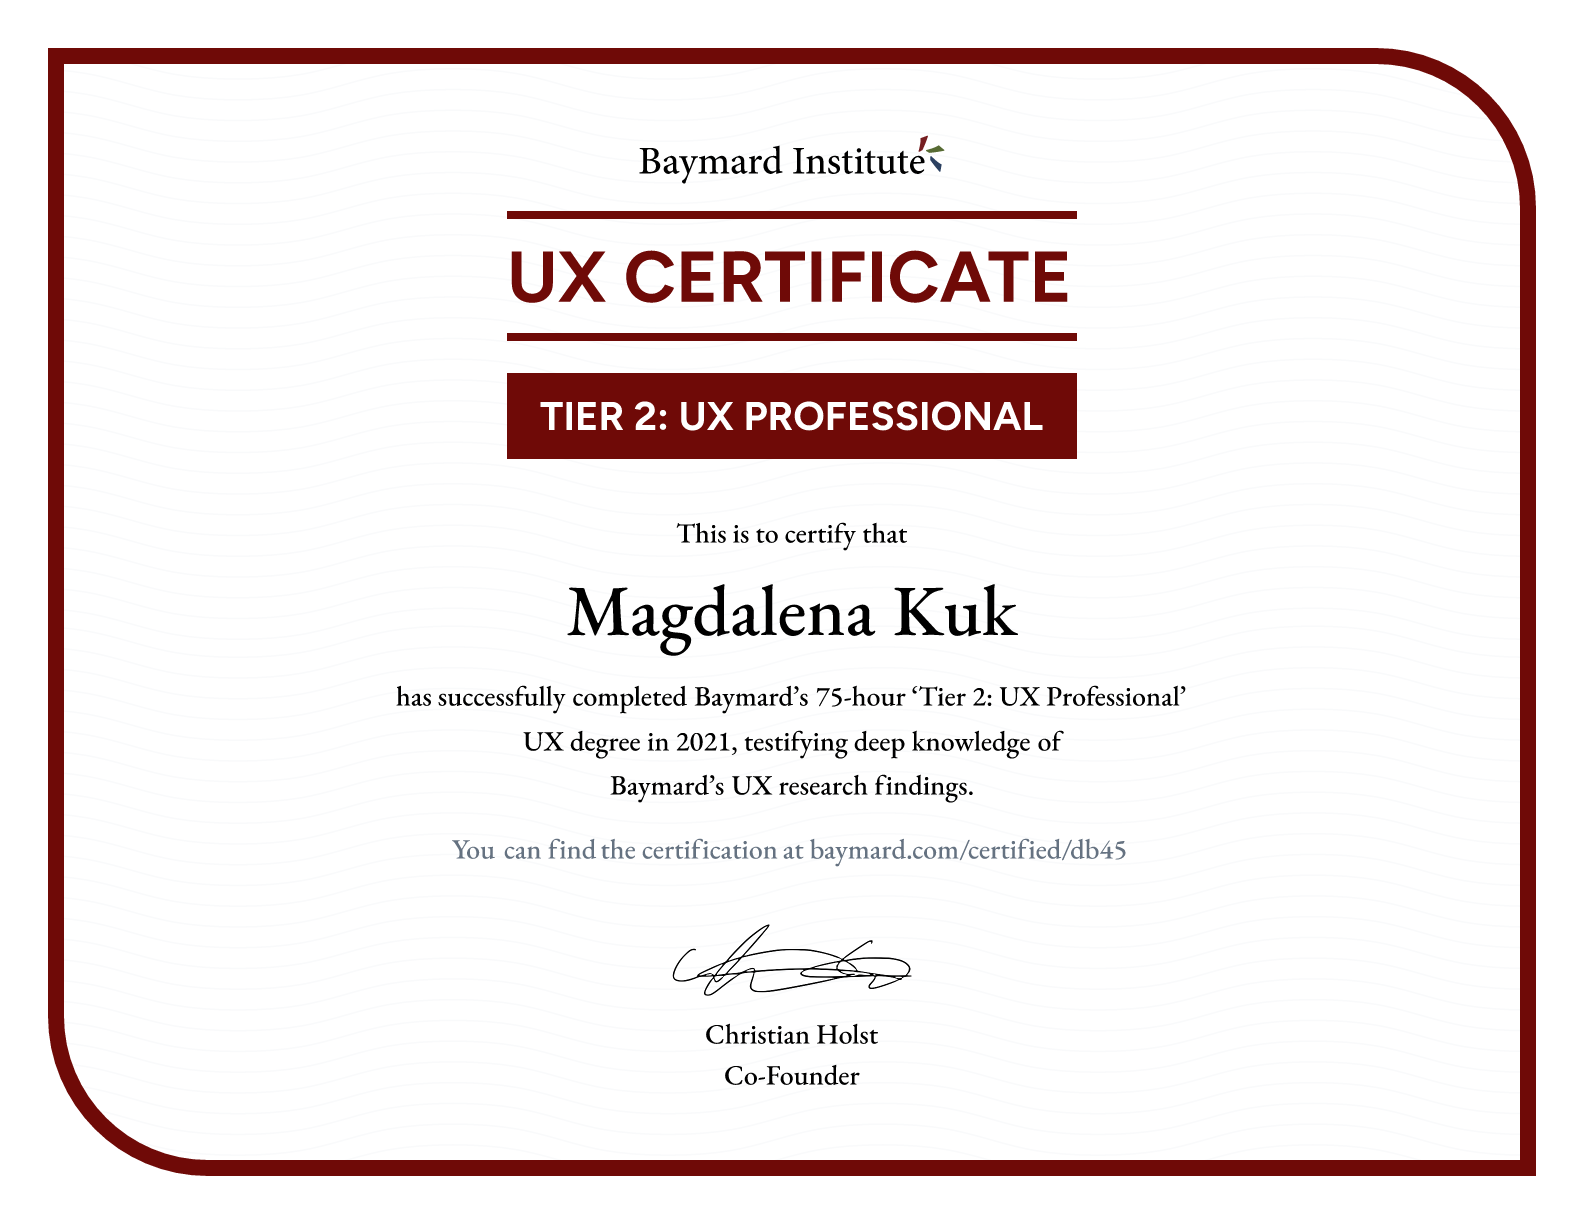 Magdalena Kuk’s certificate